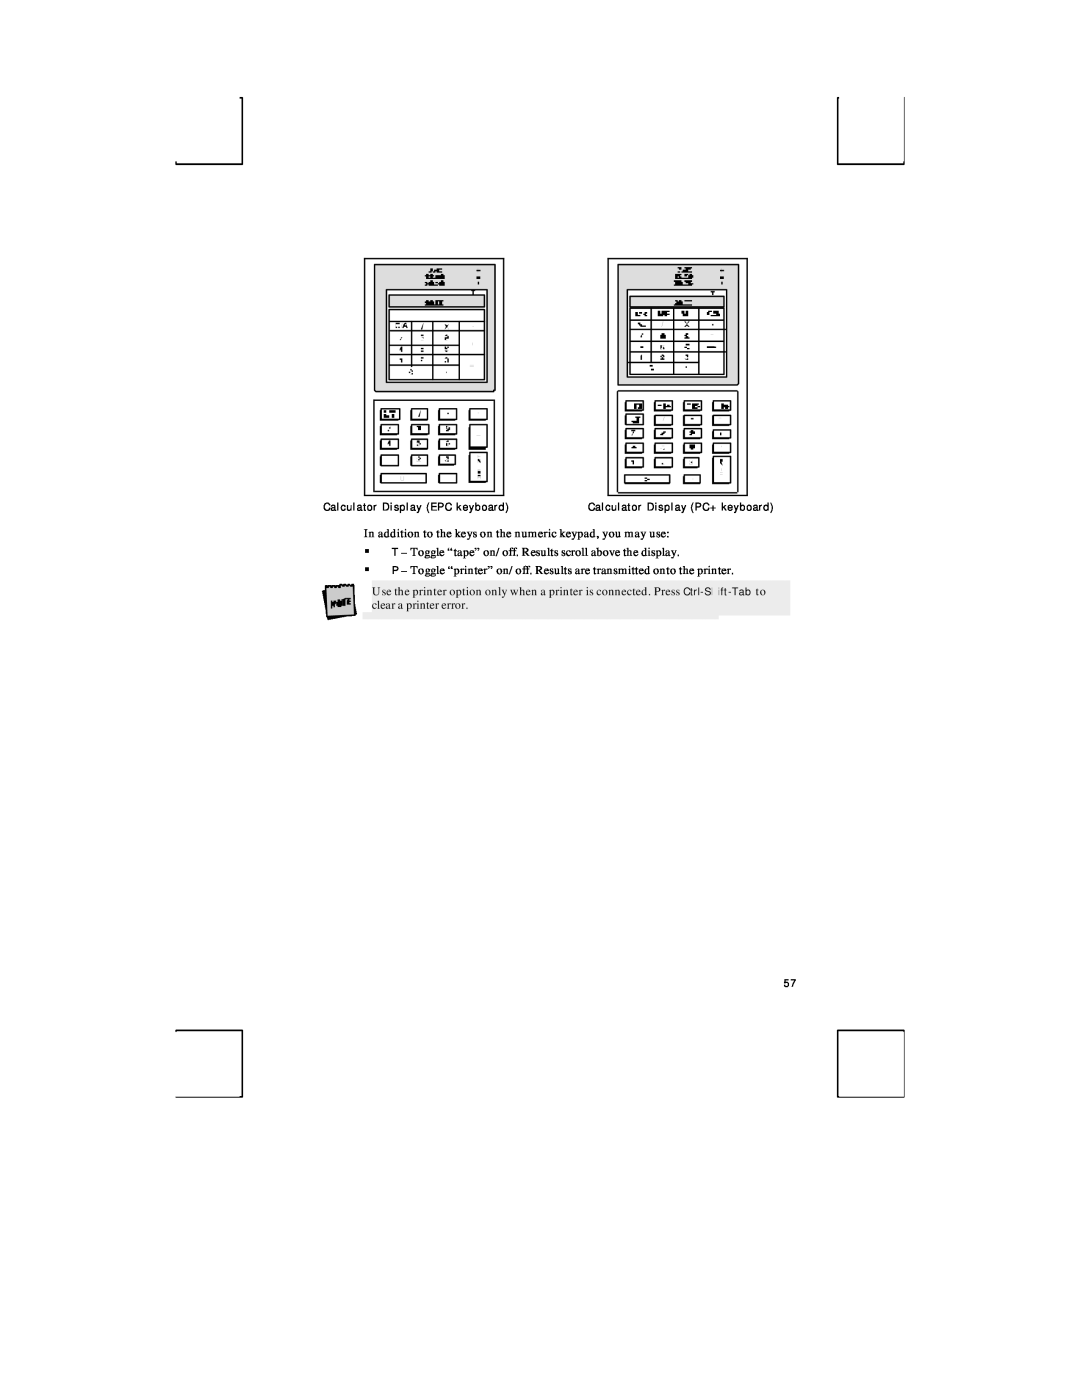 Boundless Technologies ADDS 3153 ASCII manual Calculator Display EPC keyboard, Calculator Display PC+ keyboard 